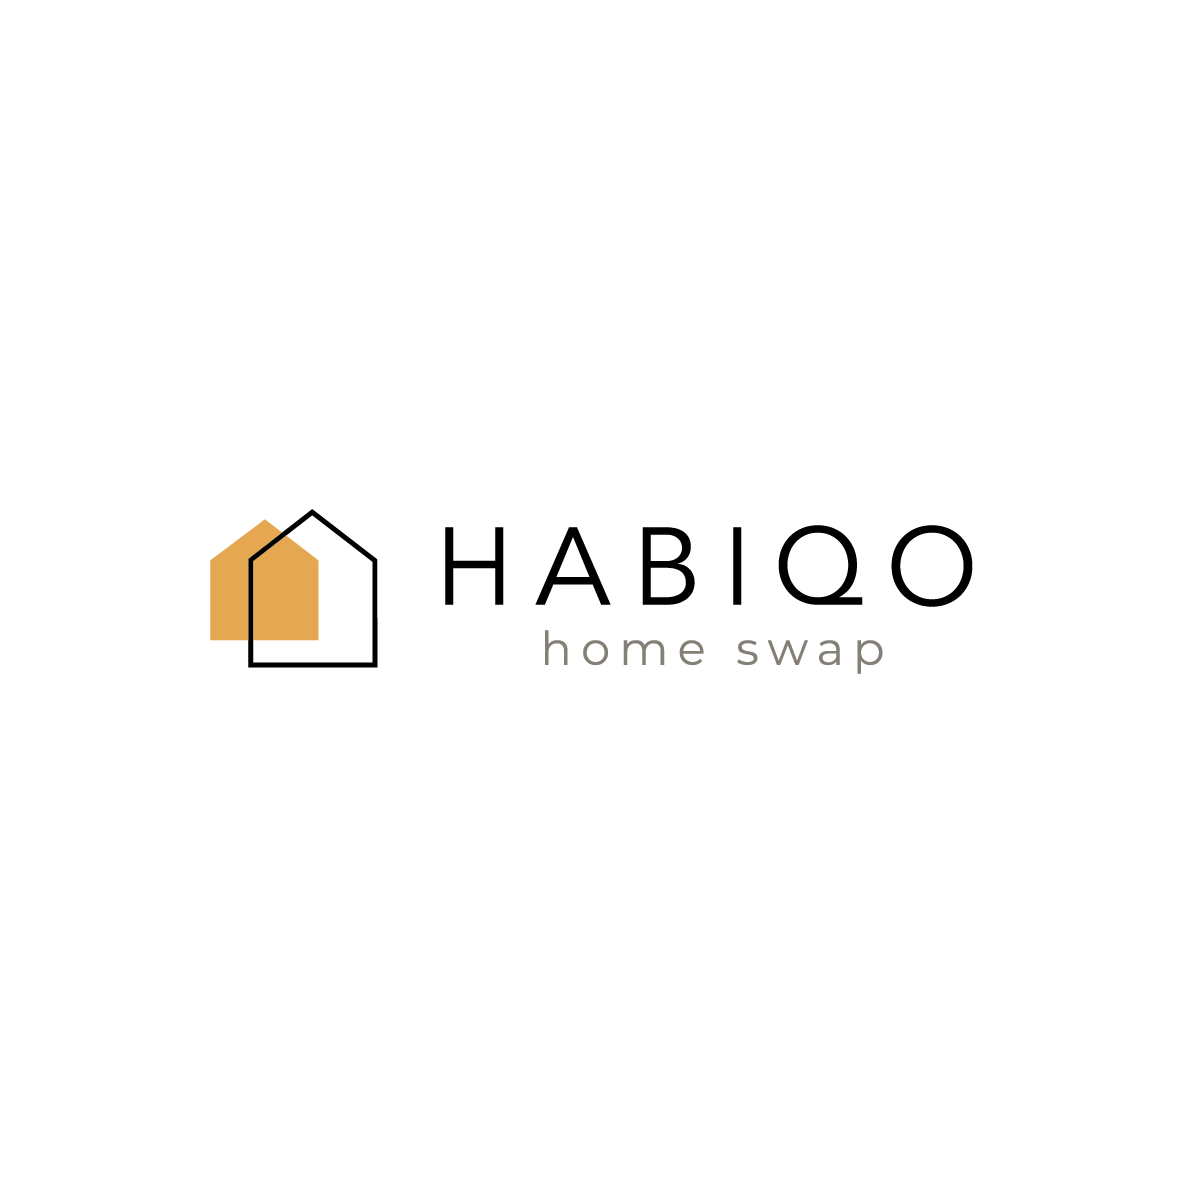 Caribbean Home Swap Announces Rebranding, Changes Name To Habiqo Home Swap